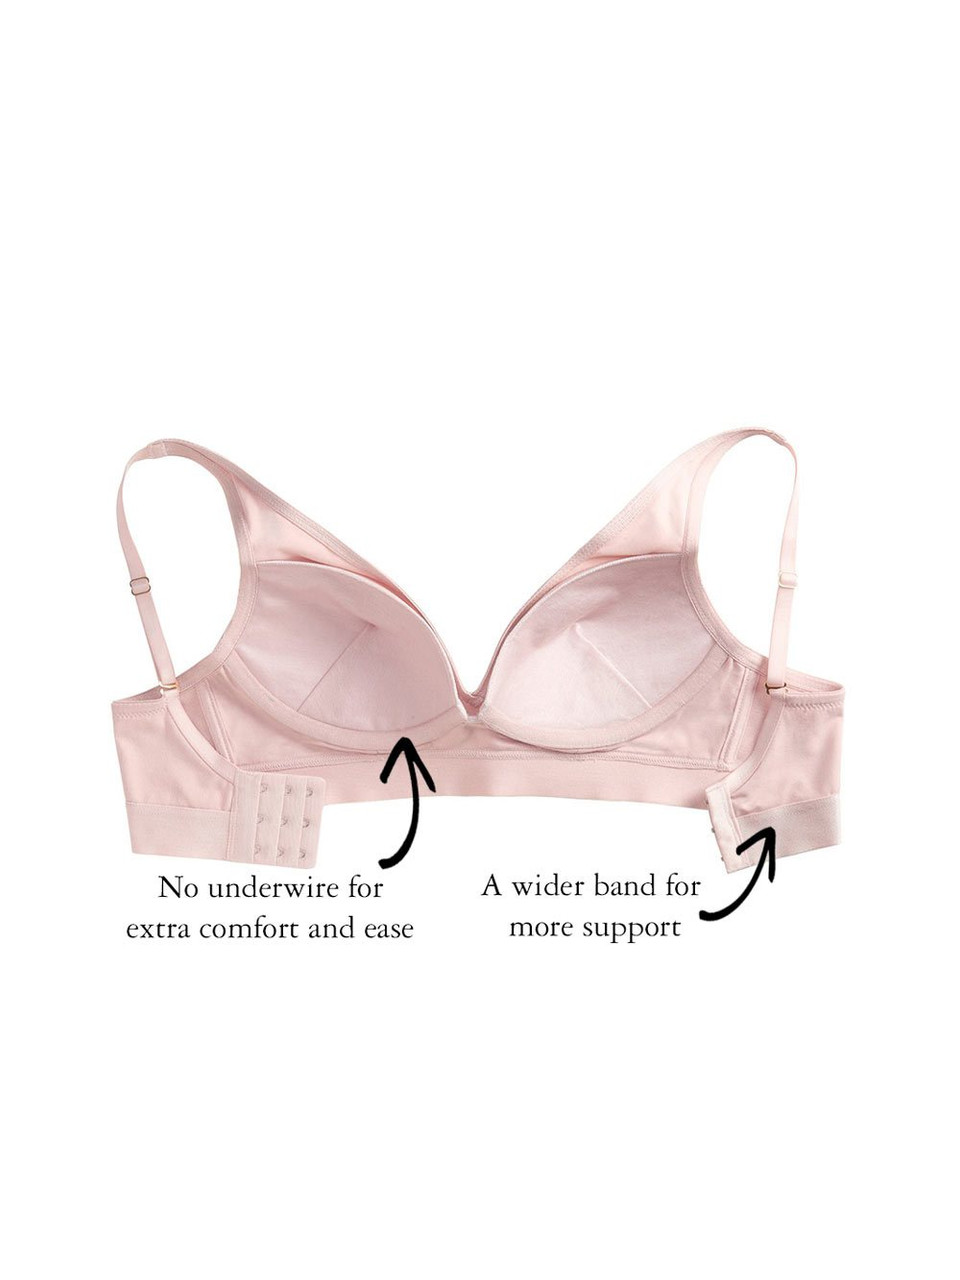 How do I measure my petite bra size